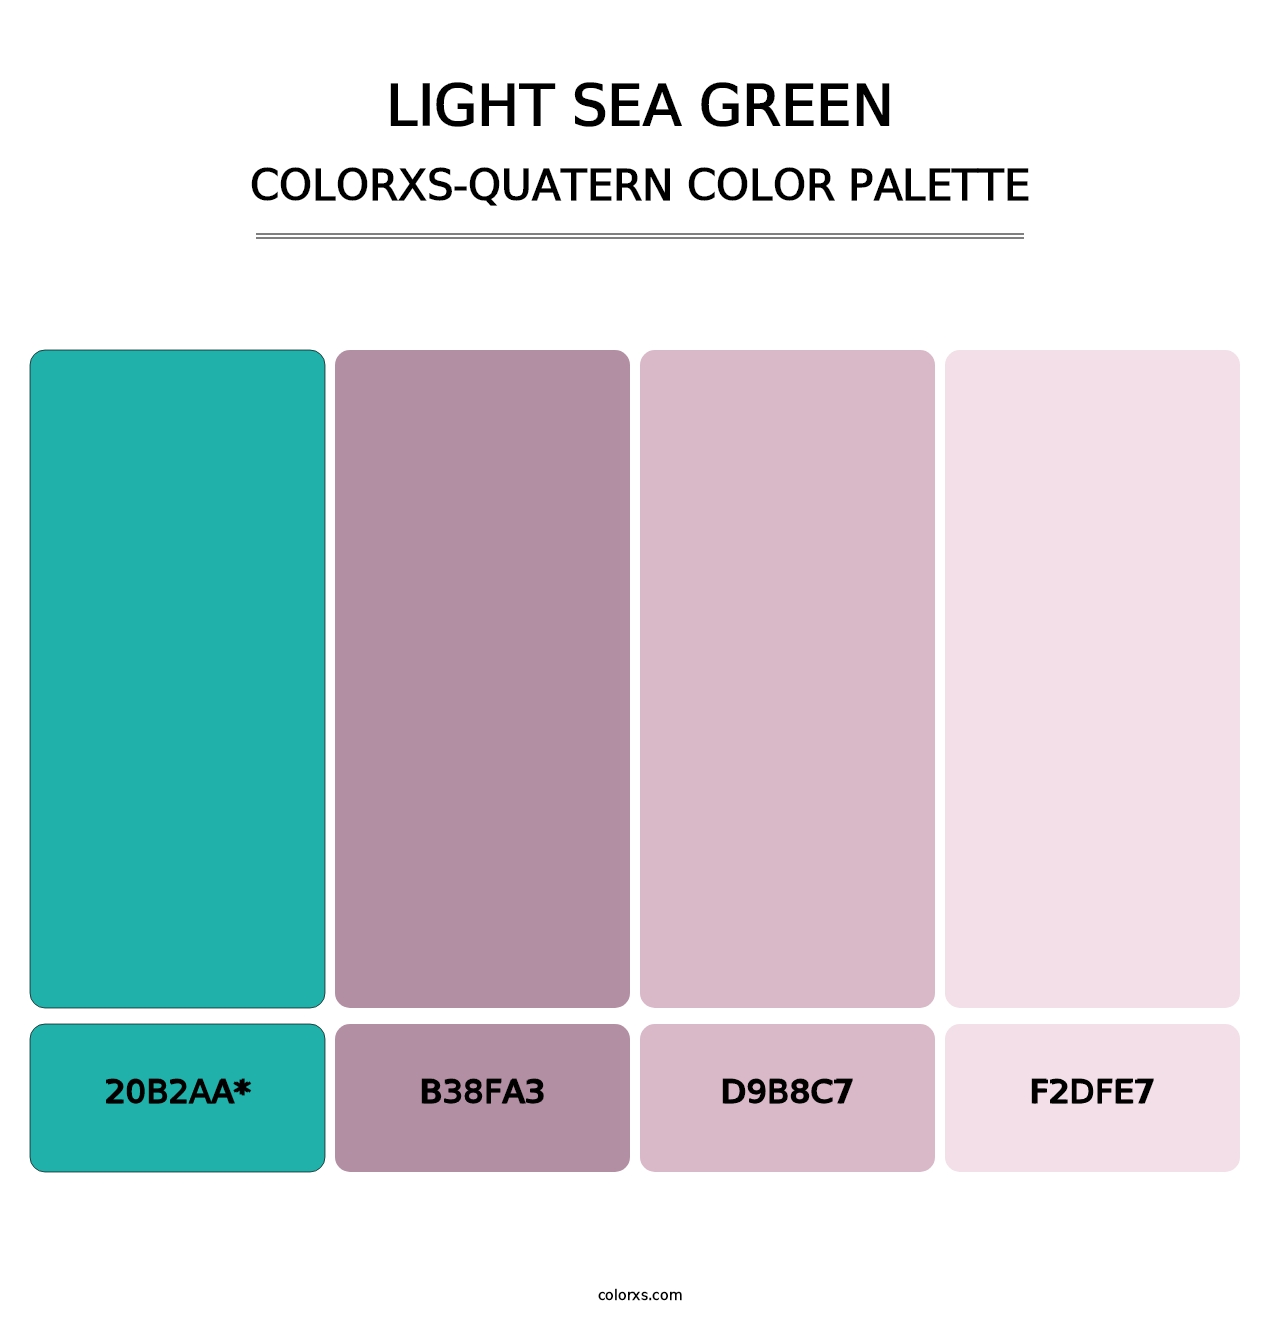 Light Sea Green - Colorxs Quatern Palette